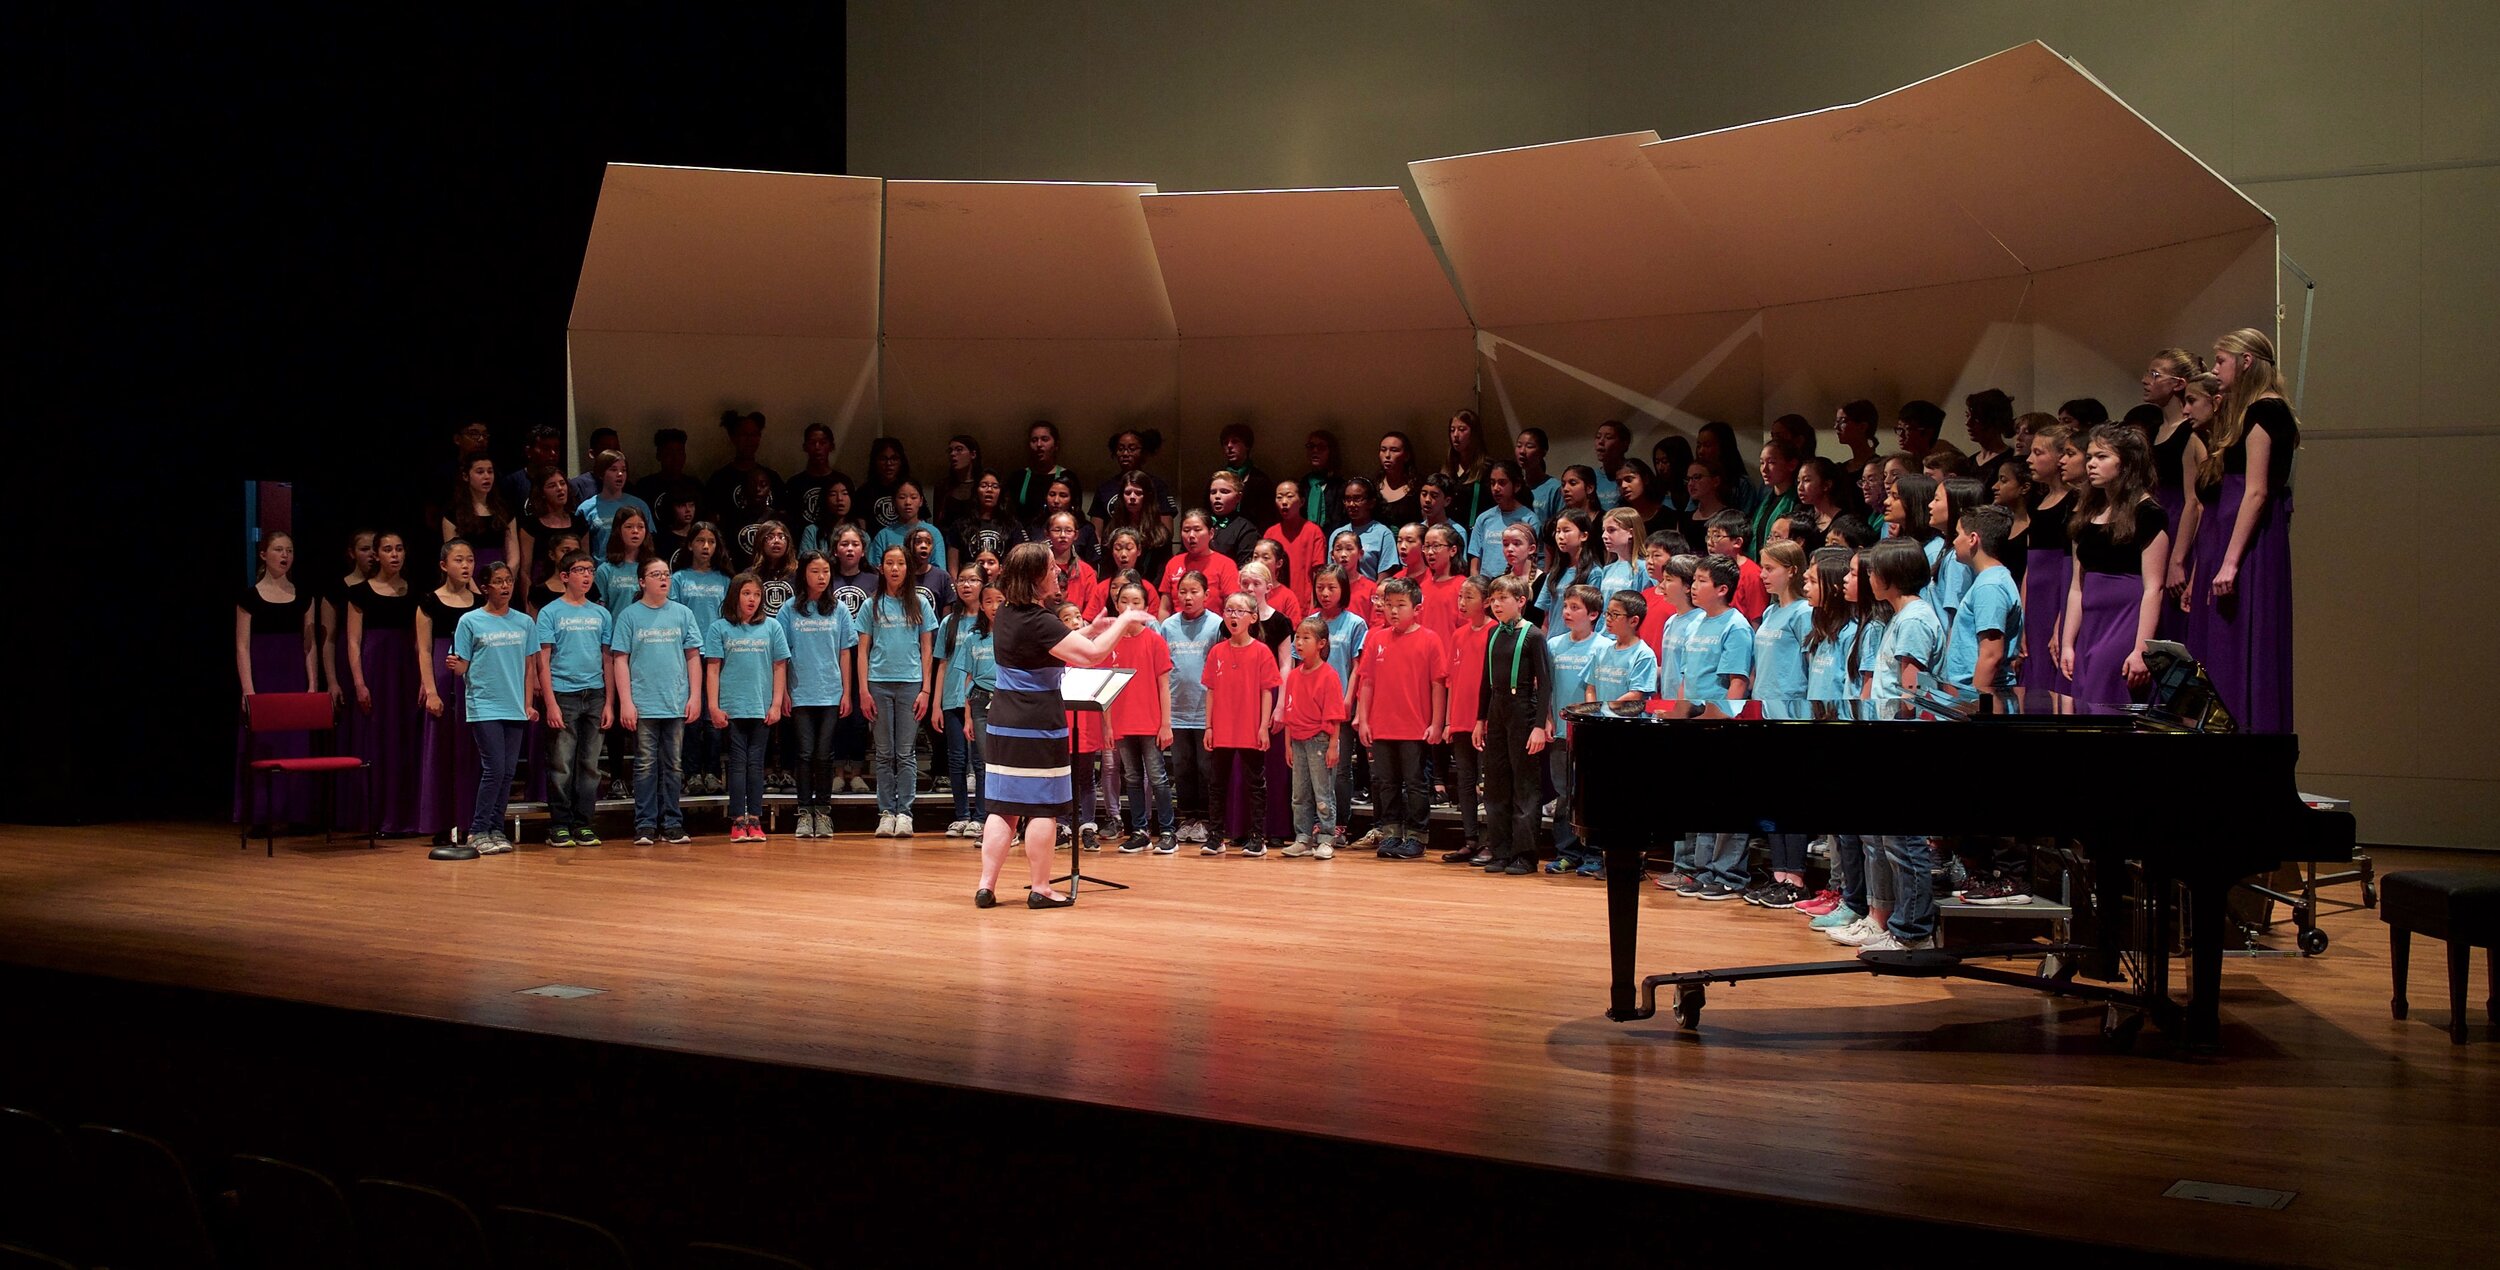 Karyn Silva (2019 Festival Clinician) conducting the combined choirs